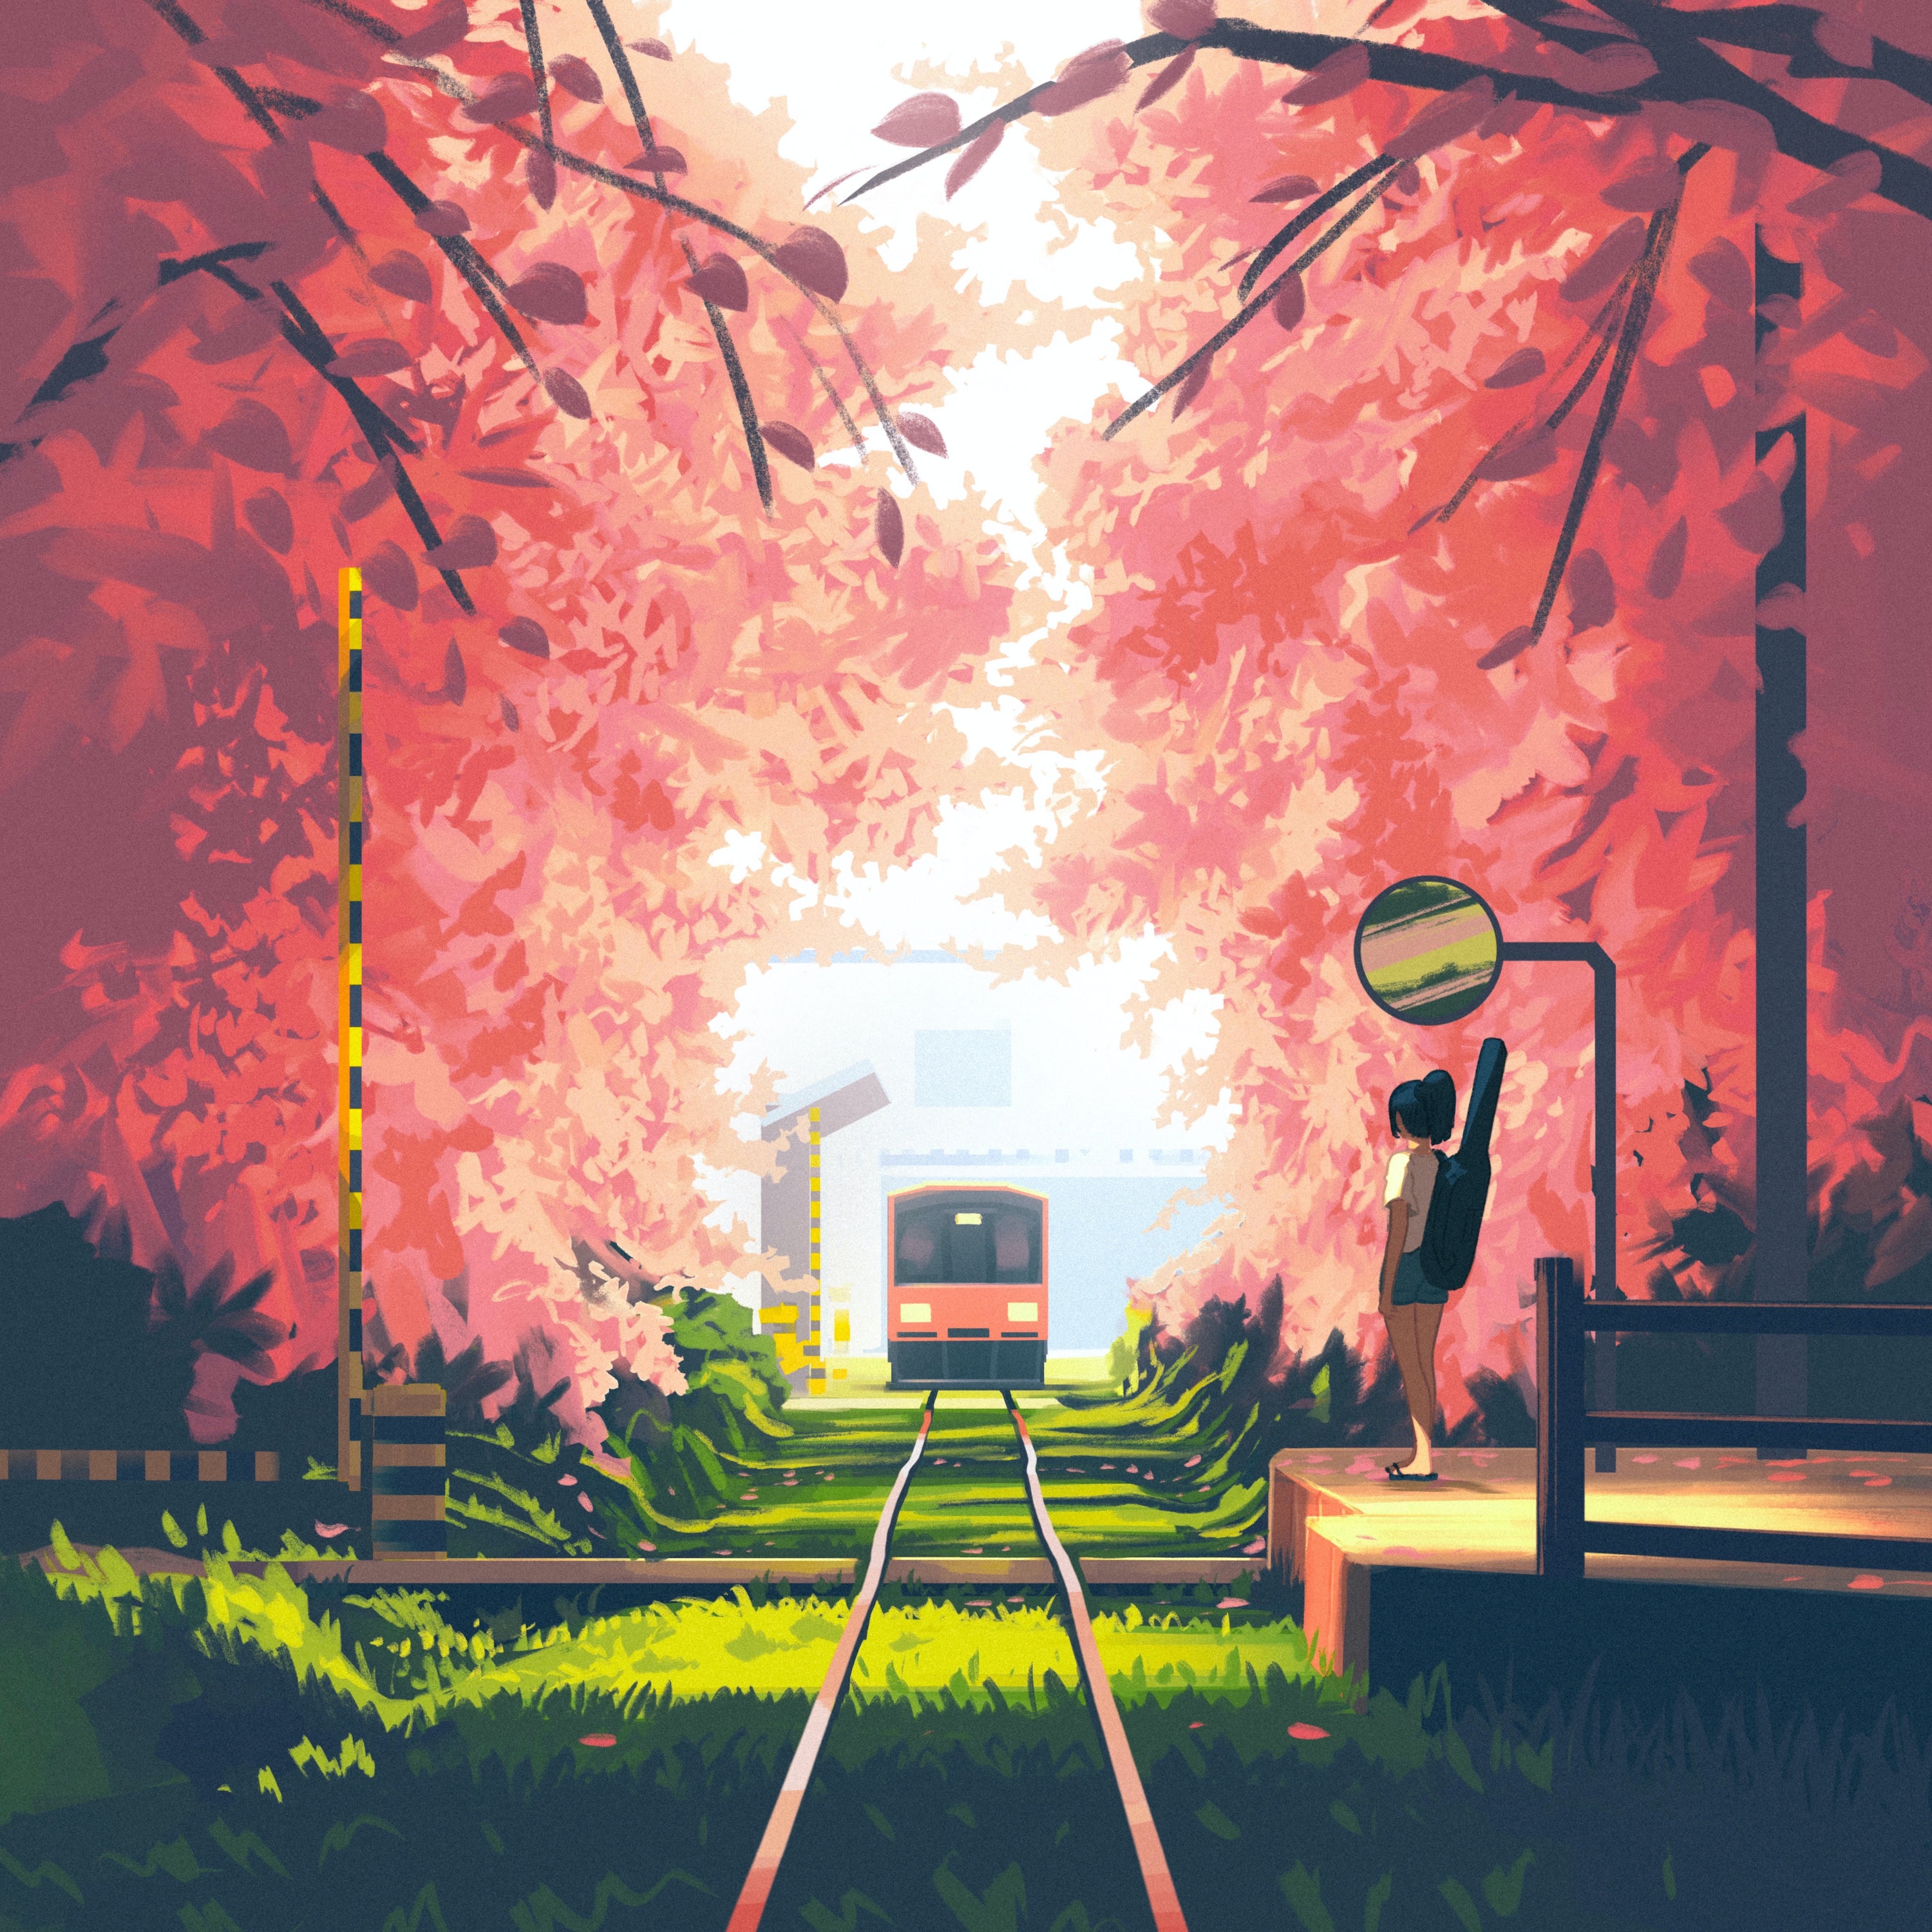 Bysau Digital Art Artwork Illustration Railway Waiting Trees Nature Train Grass Guitar Anime Girls 3000x3000